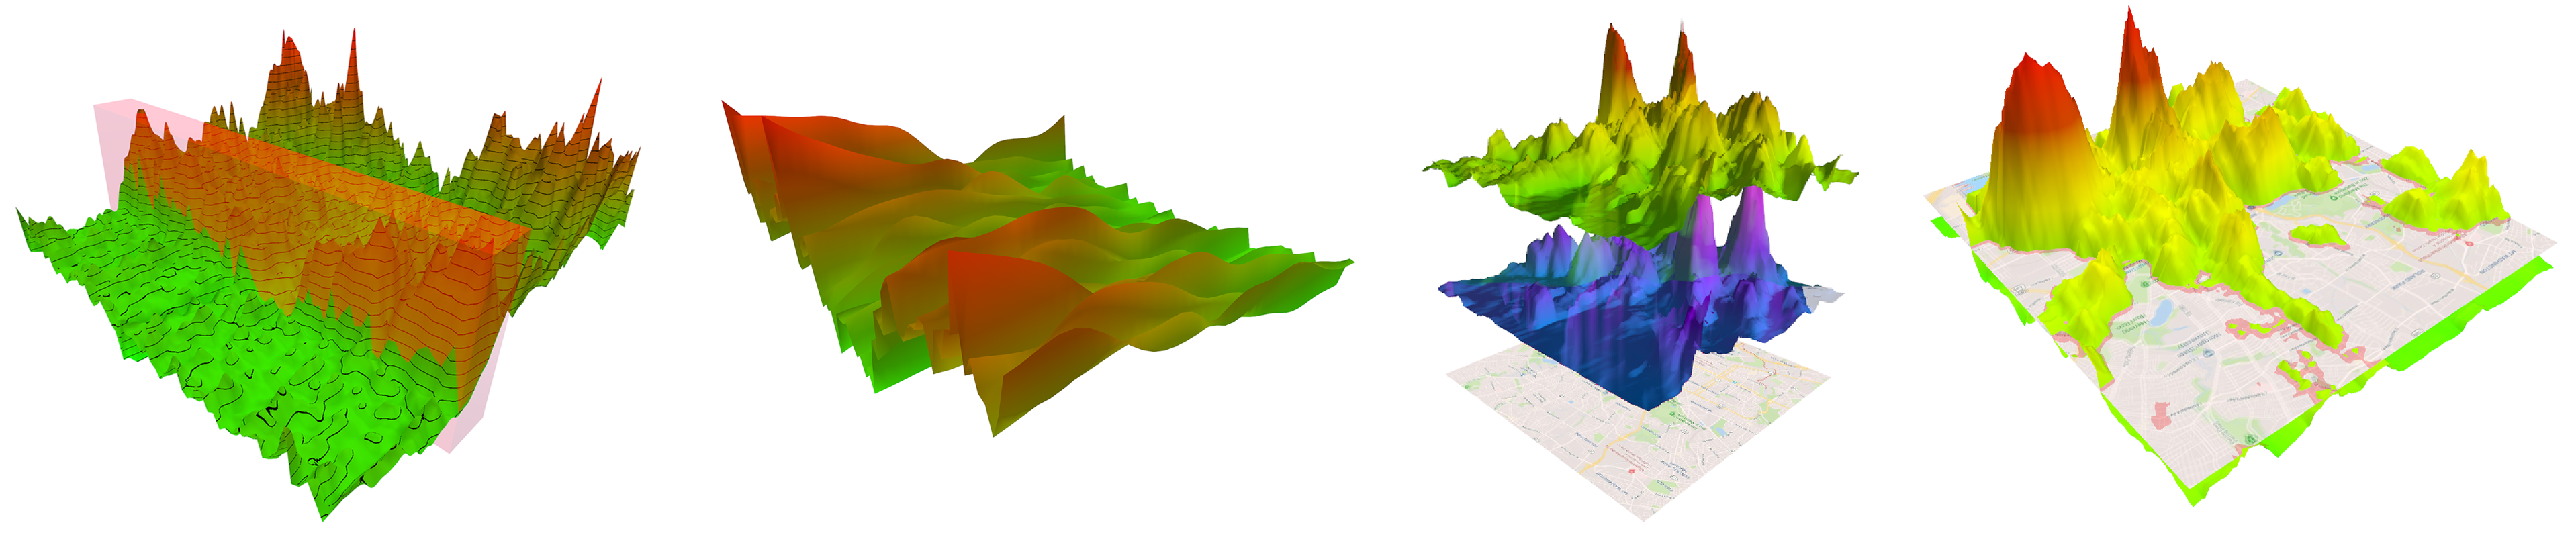 Assessing 2D and 3D Heatmaps for Comparative Analysis: An Empirical Study